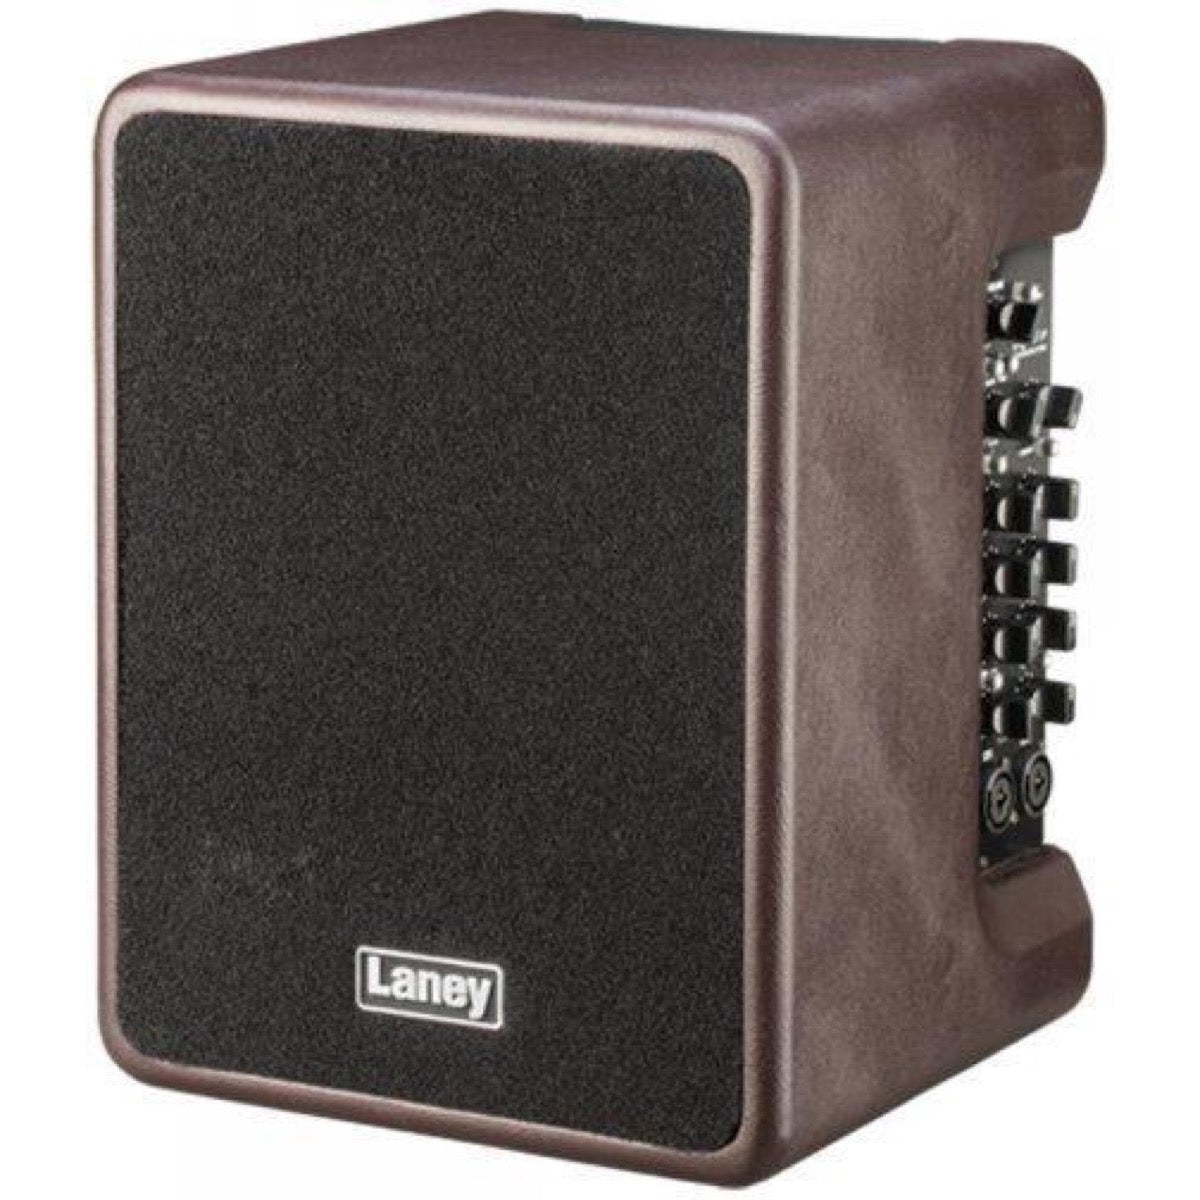 Laney A-FRESCO-2 Battery-Powered Acoustic Guitar Amplifier (60 Watts, 1x8 Inch)